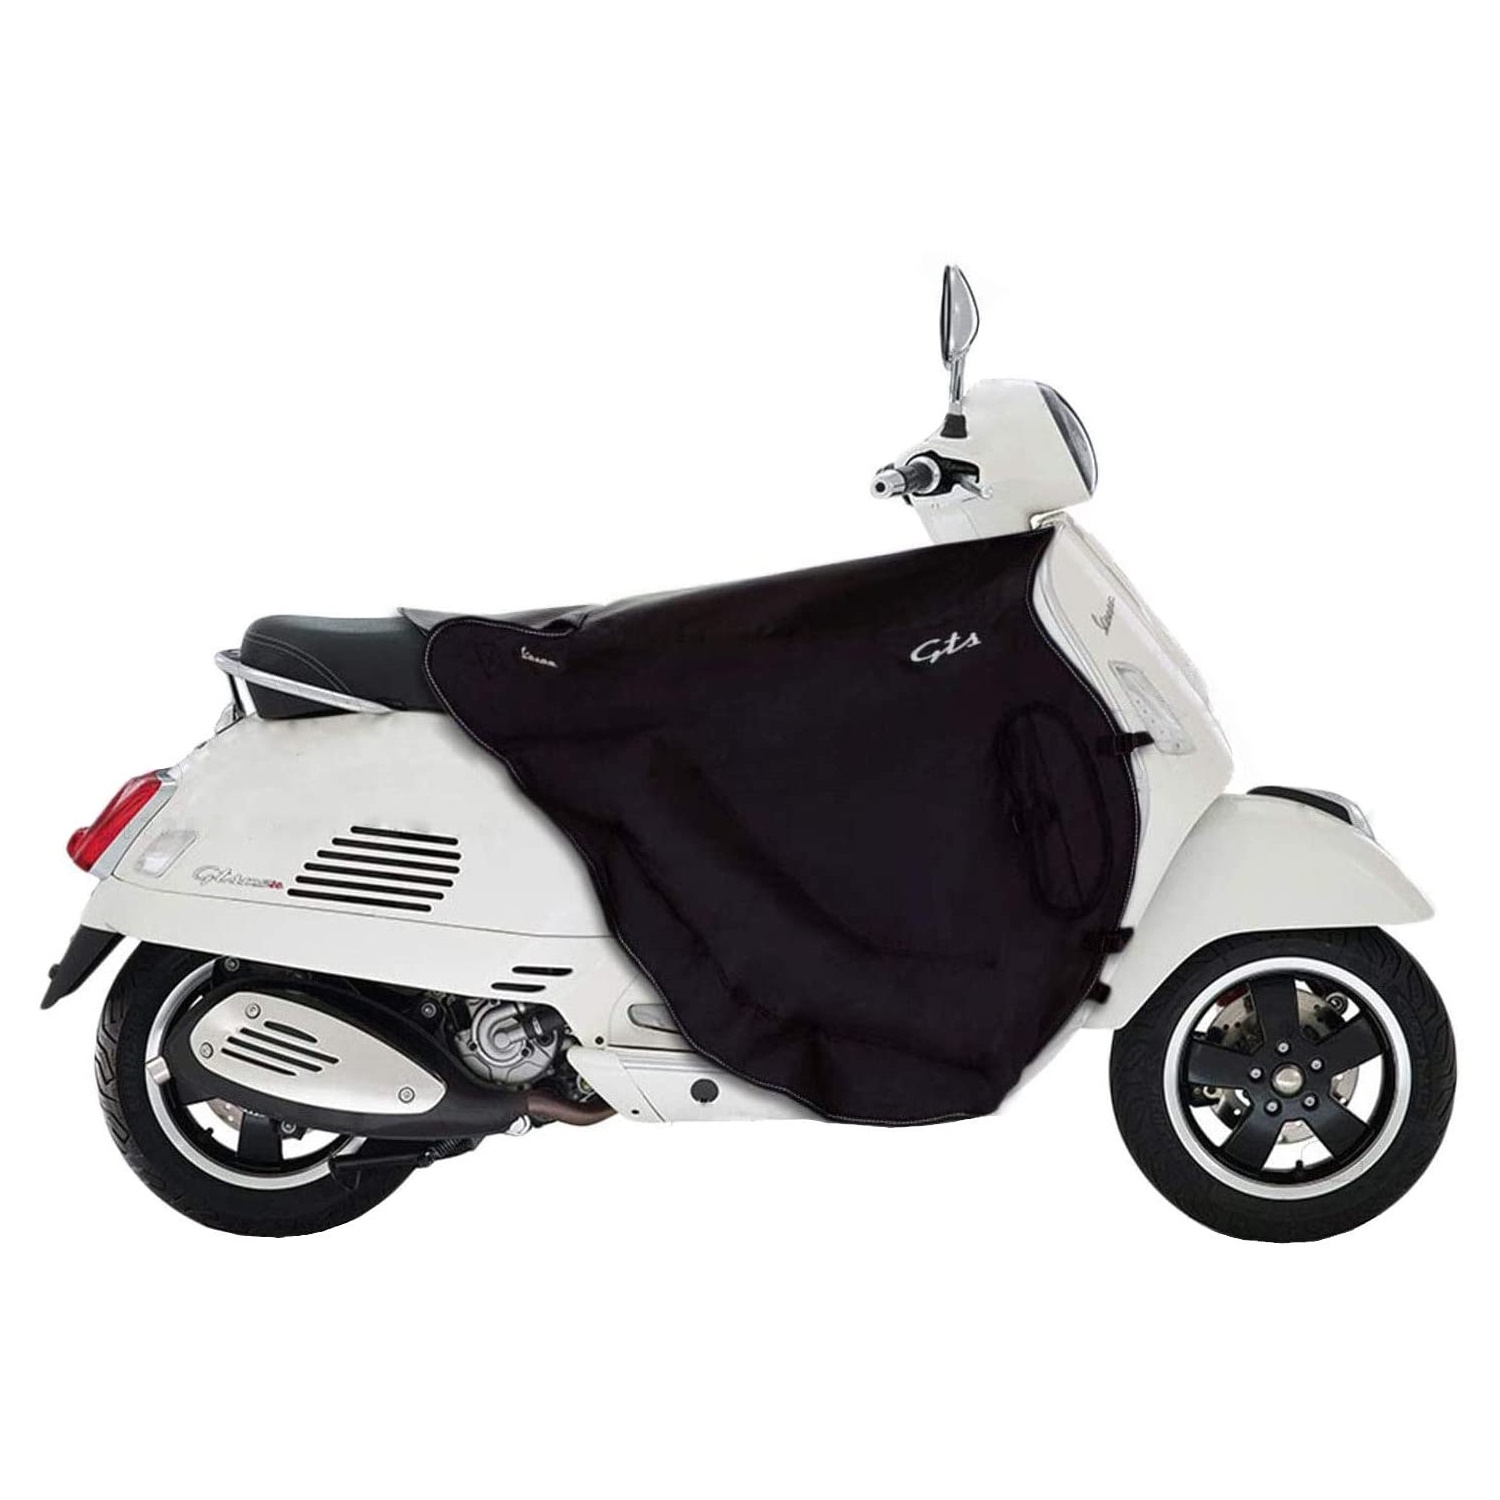 Couvre-jambes hydrofuge pour scooter et moto, couverture